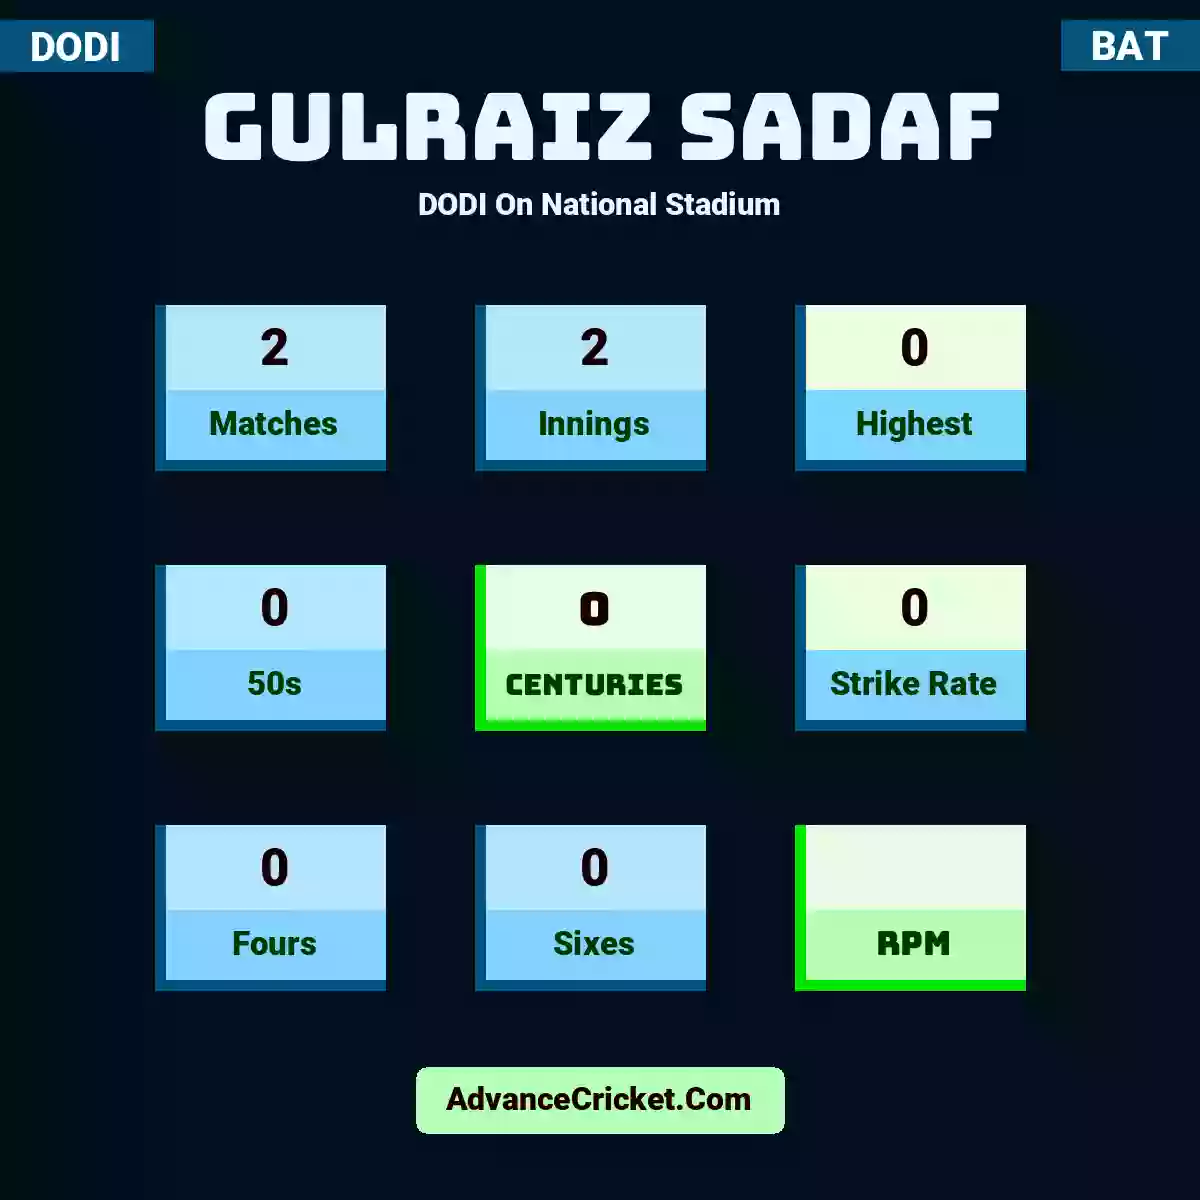 Gulraiz Sadaf DODI  On National Stadium, Gulraiz Sadaf played 2 matches, scored 0 runs as highest, 0 half-centuries, and 0 centuries, with a strike rate of 0. G.Sadaf hit 0 fours and 0 sixes.